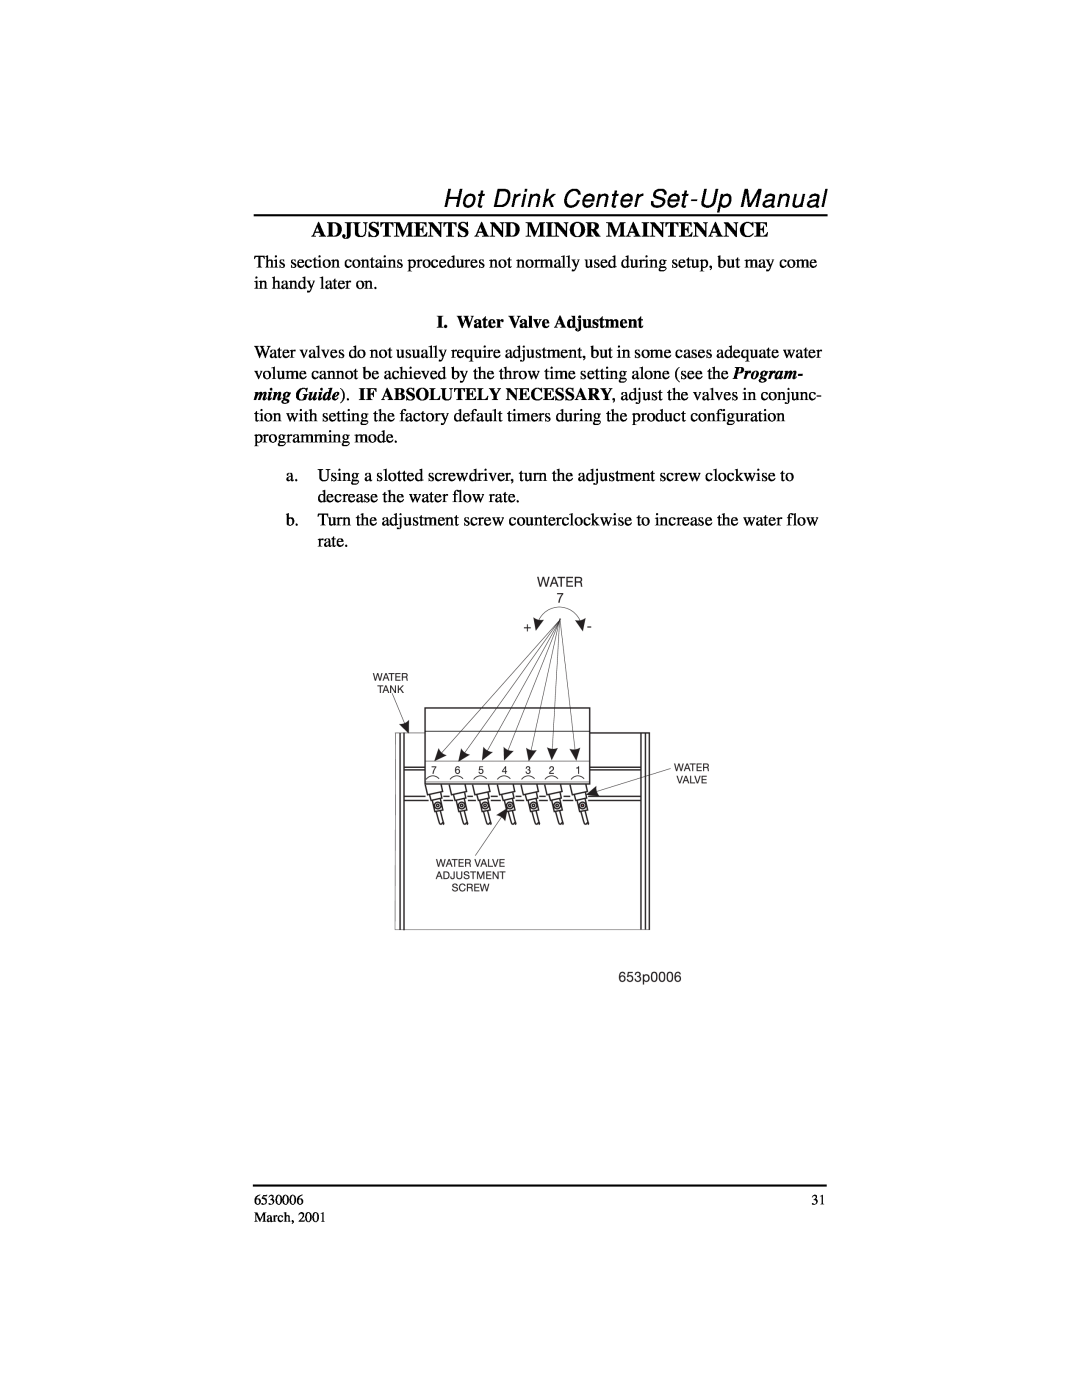 Crane Merchandising Systems 6530006 manual Adjustments And Minor Maintenance, Hot Drink Center Set-Up Manual 